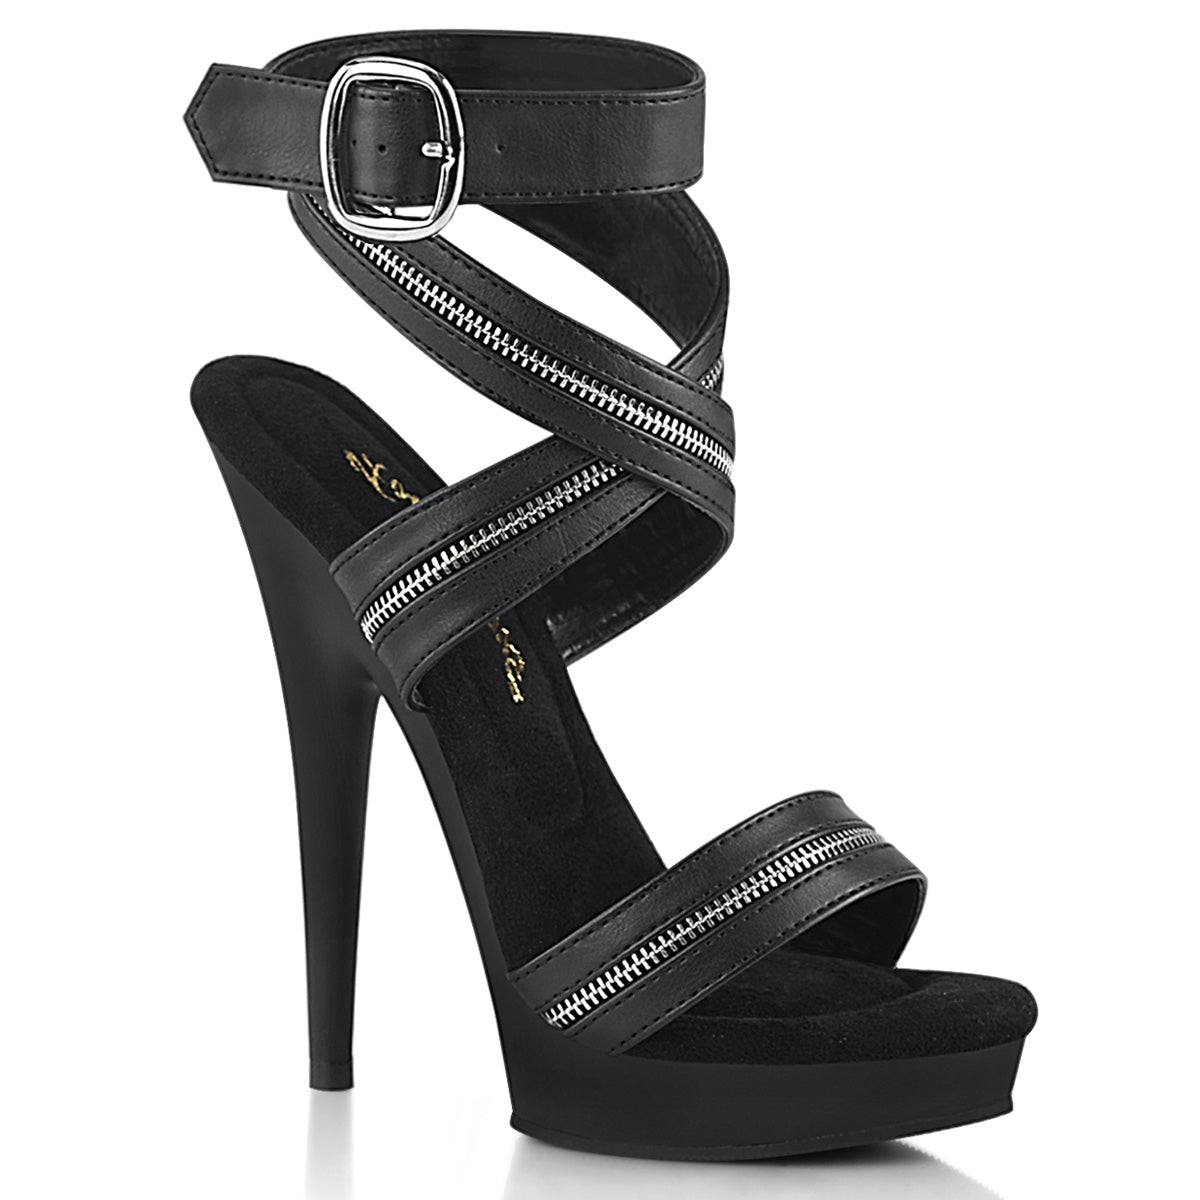 6" Heel, 1" Platform Black Pu Color Zipper-Inlaid Wrap-Around Sandal